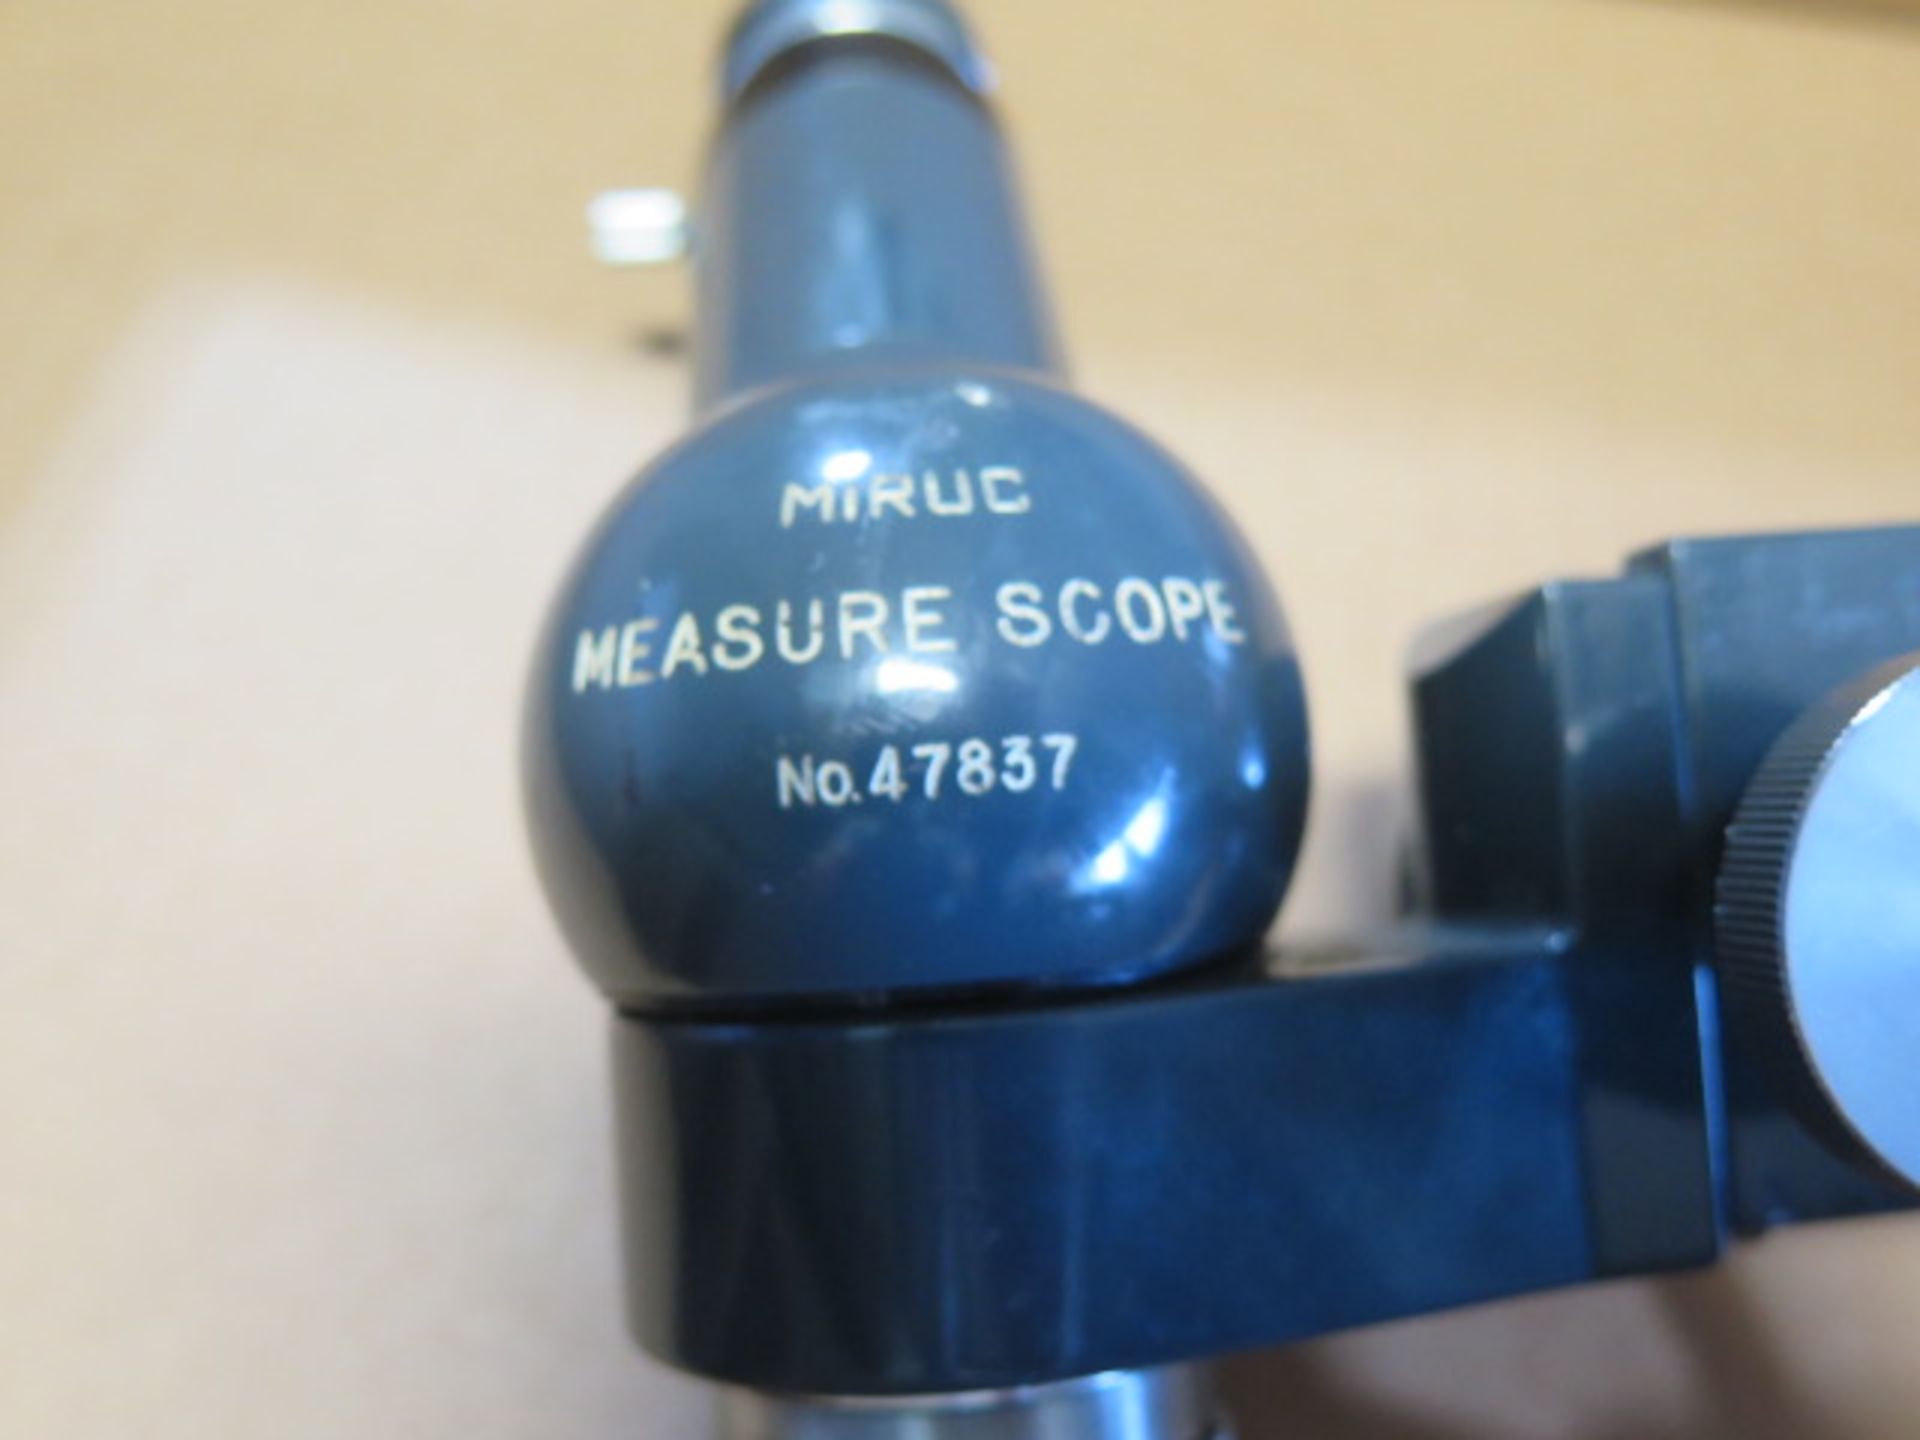 Miruc Measure Scope s/n 47837 (SOLD AS-IS – NO WARRANTY) - Image 4 of 4